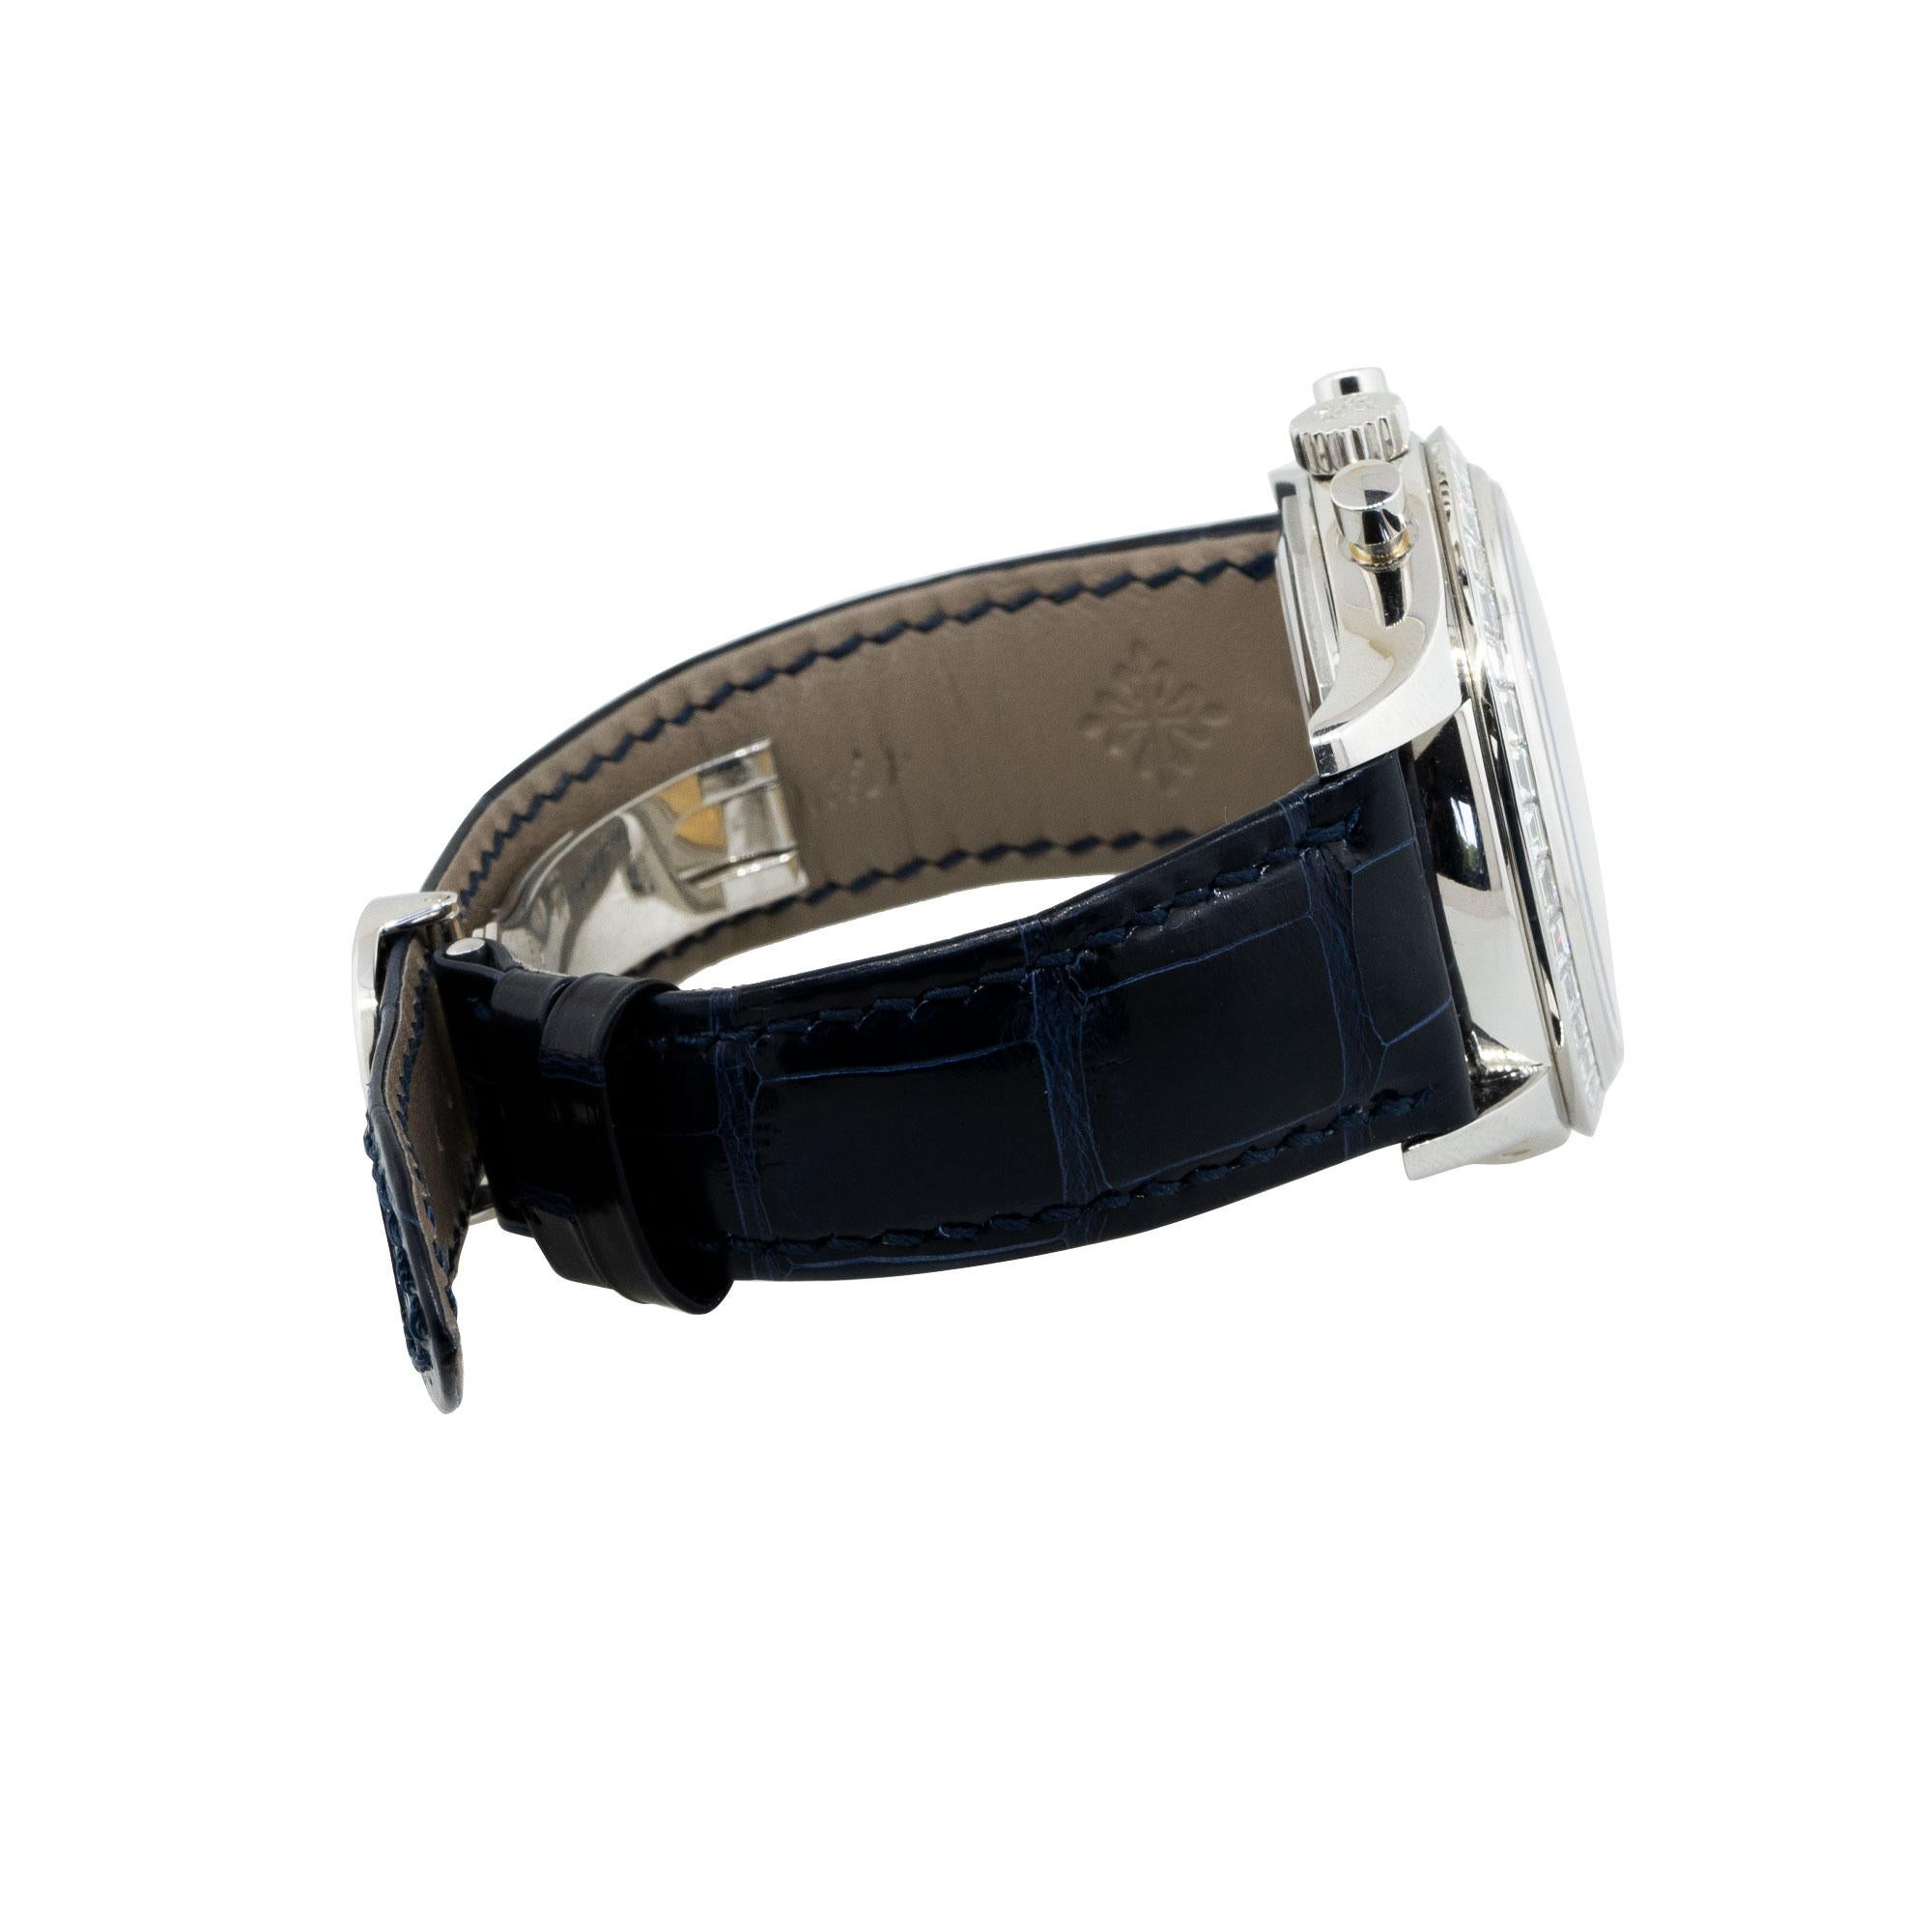 Baguette Cut Patek Philippe 5961P Complications Platinum Blue Annual Calendar Dial Watch